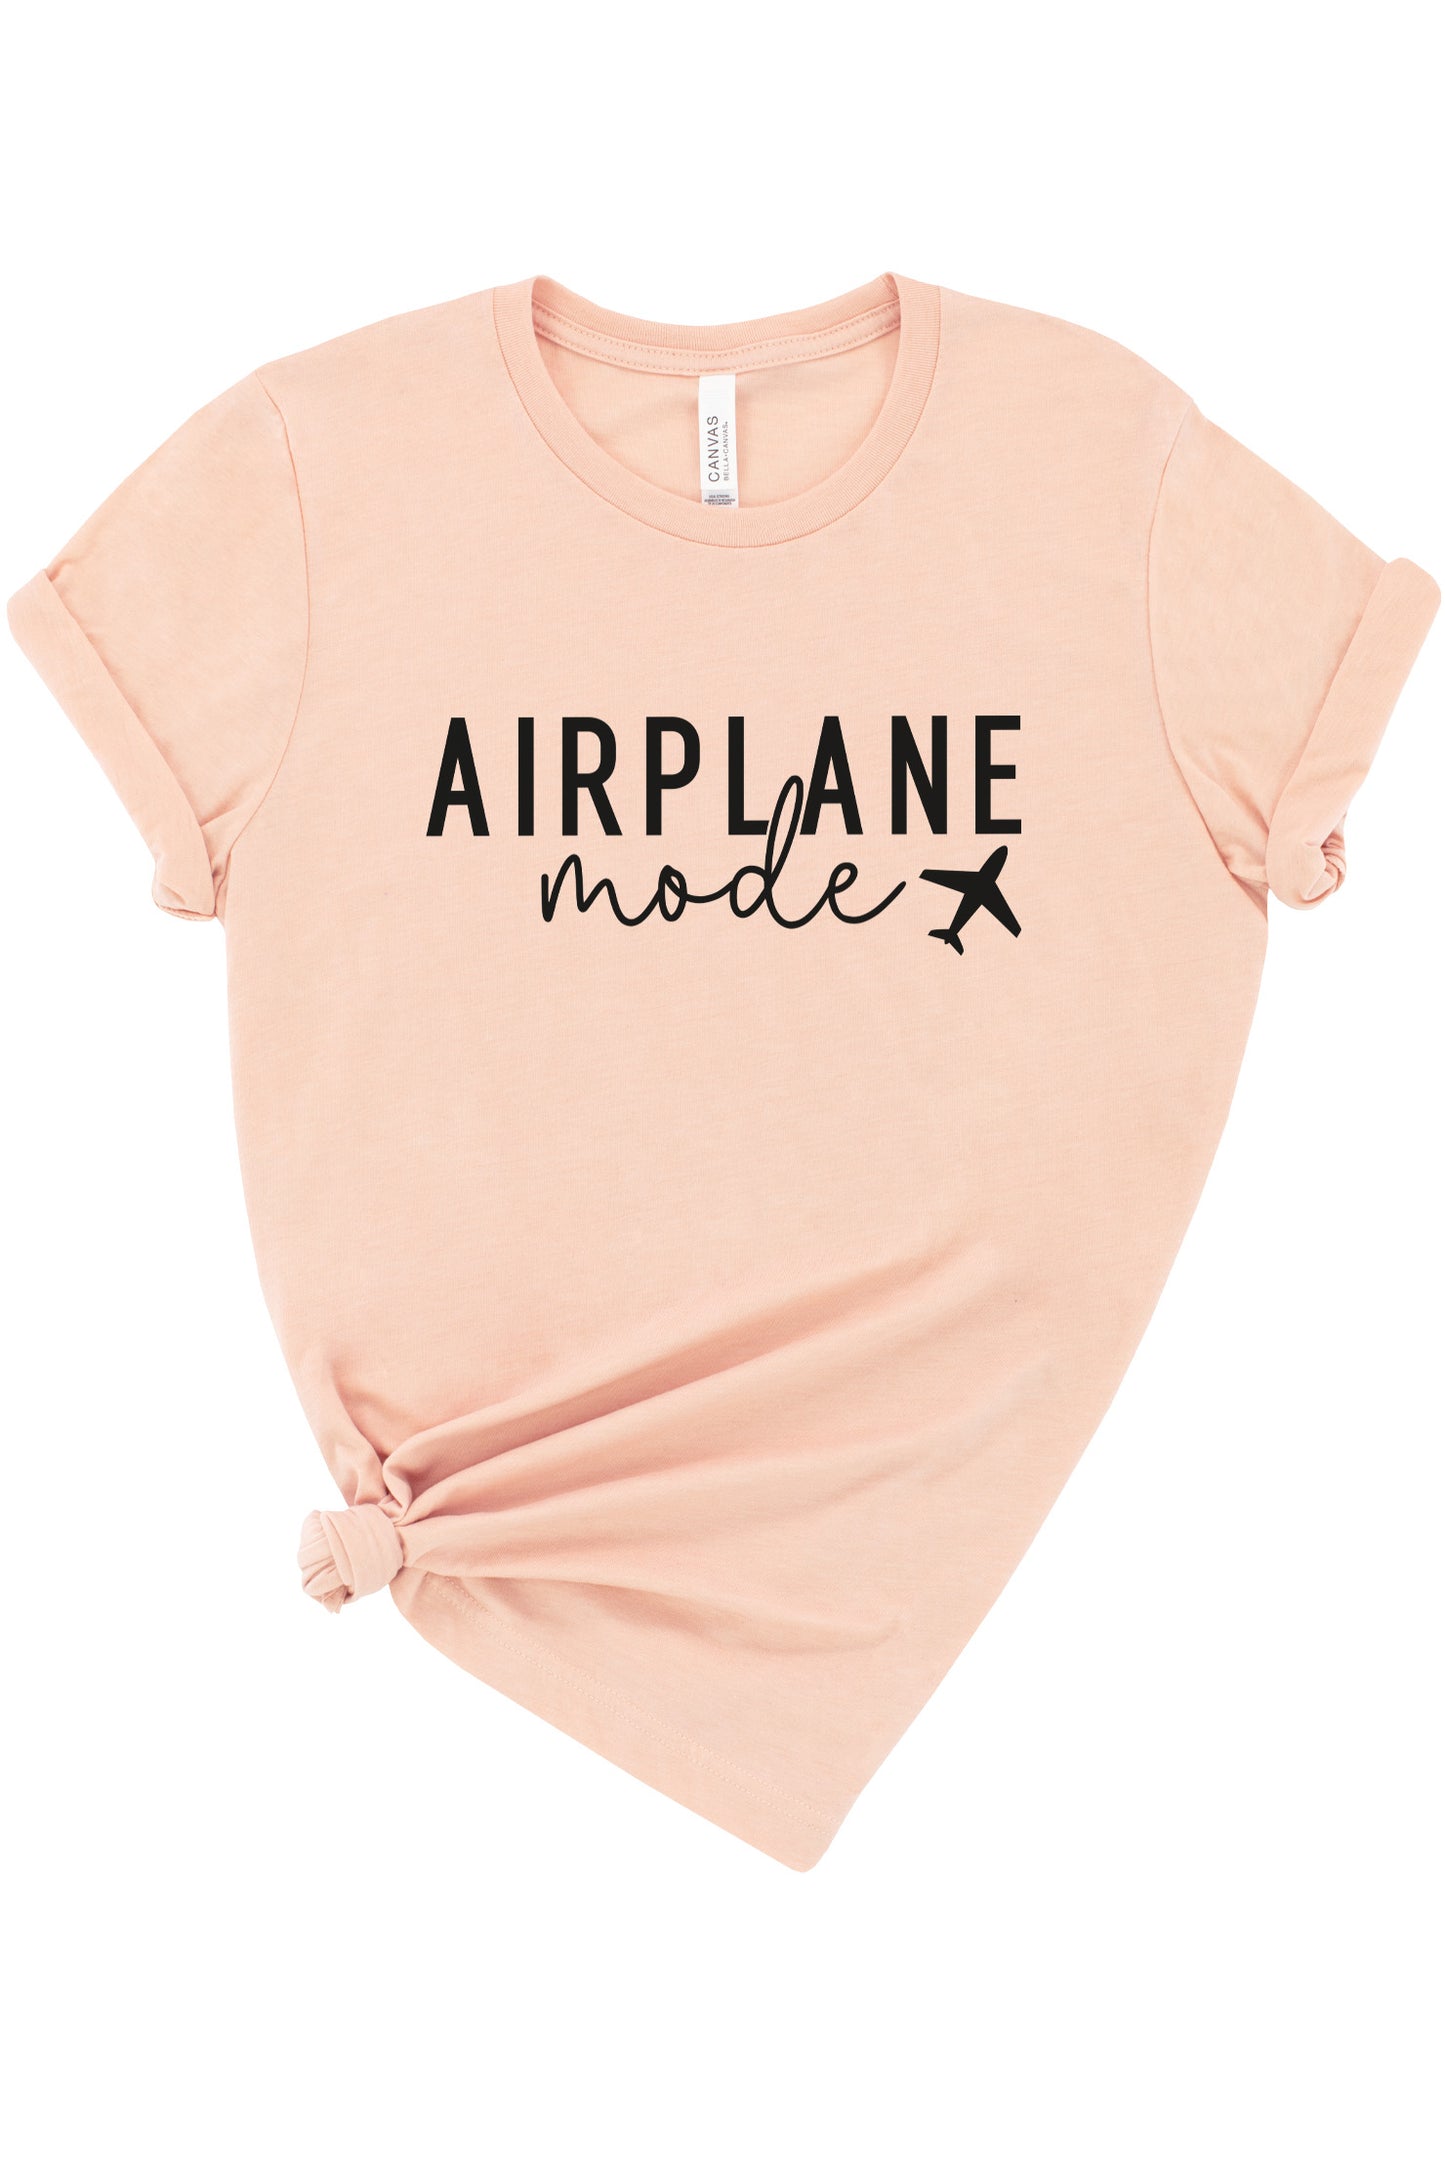 Airplane Mode Graphic Tee